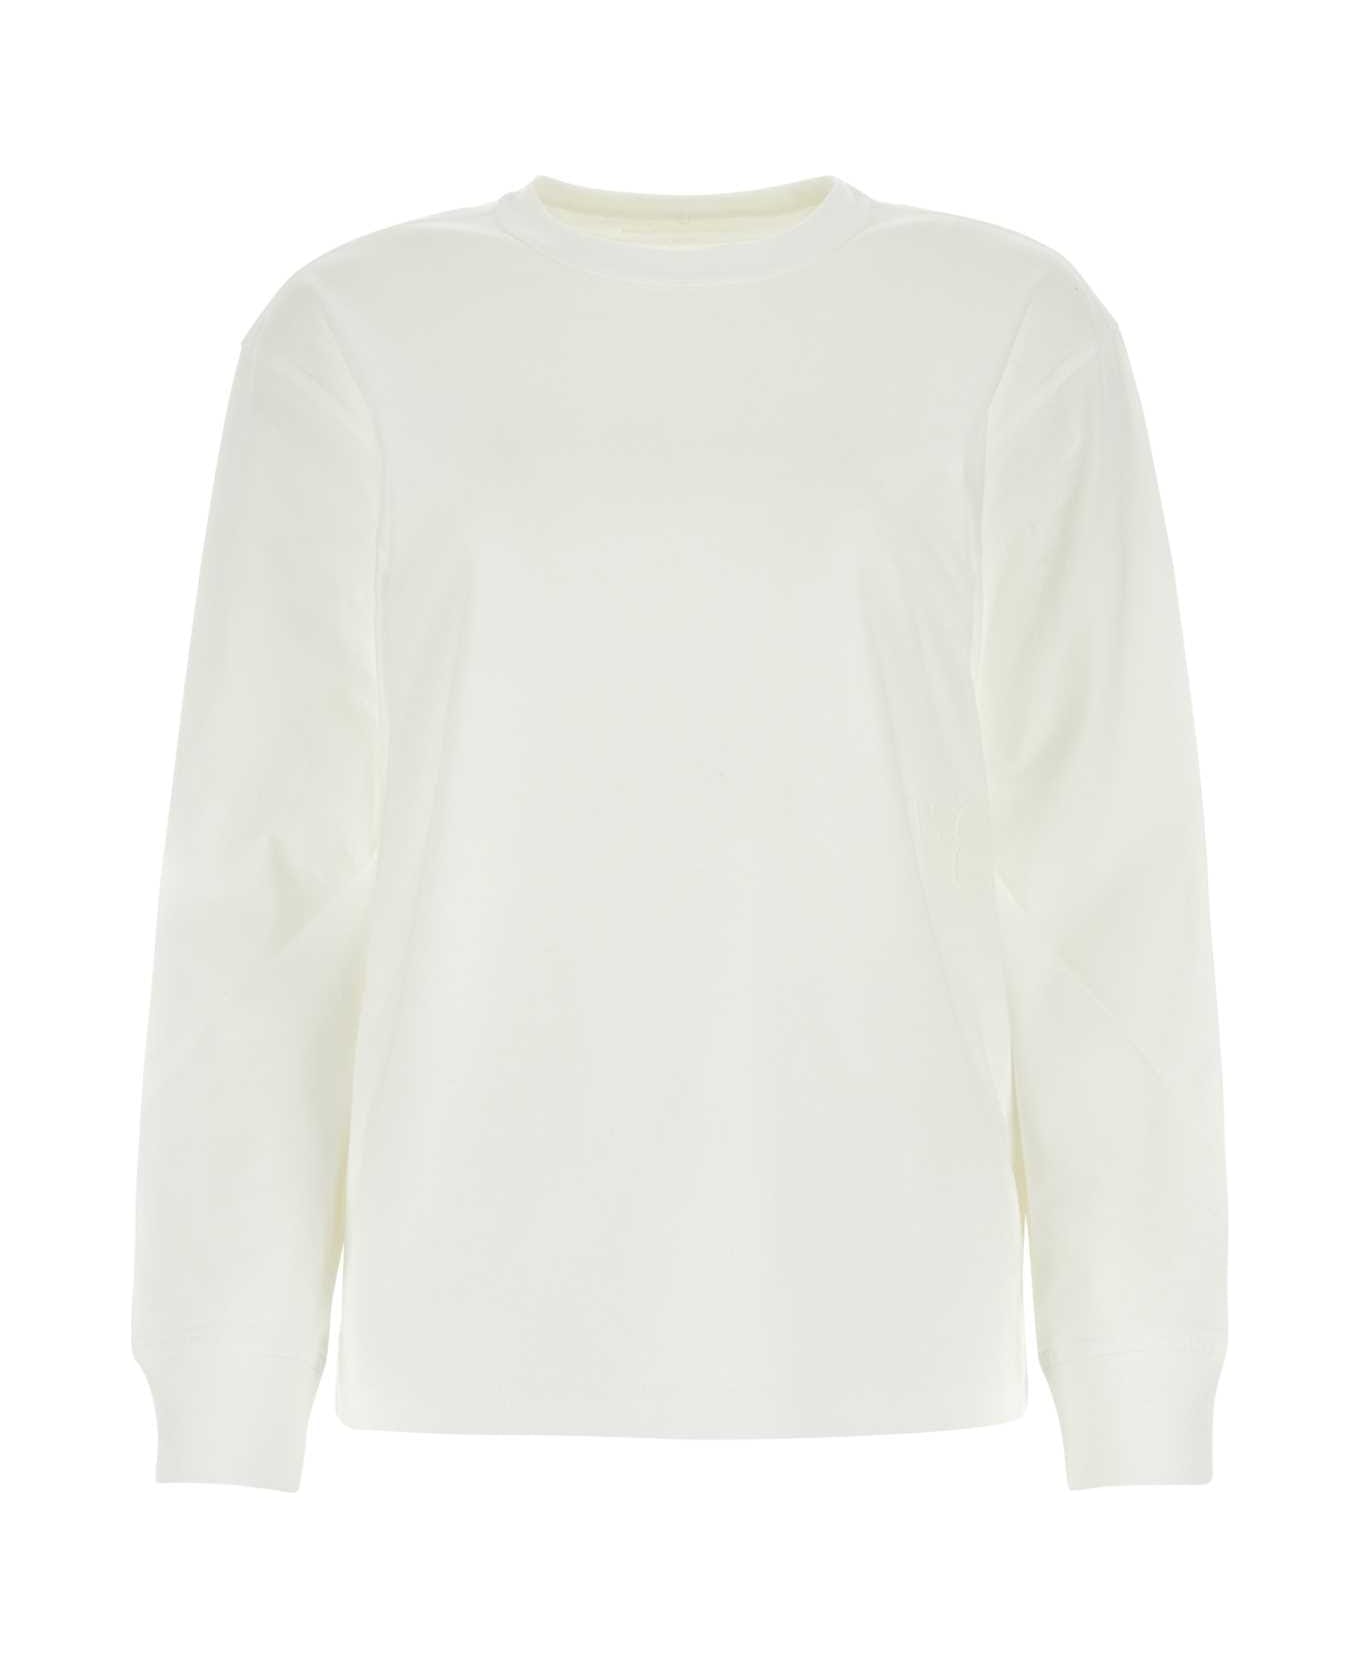 T by Alexander Wang White Cotton T-shirt - 100